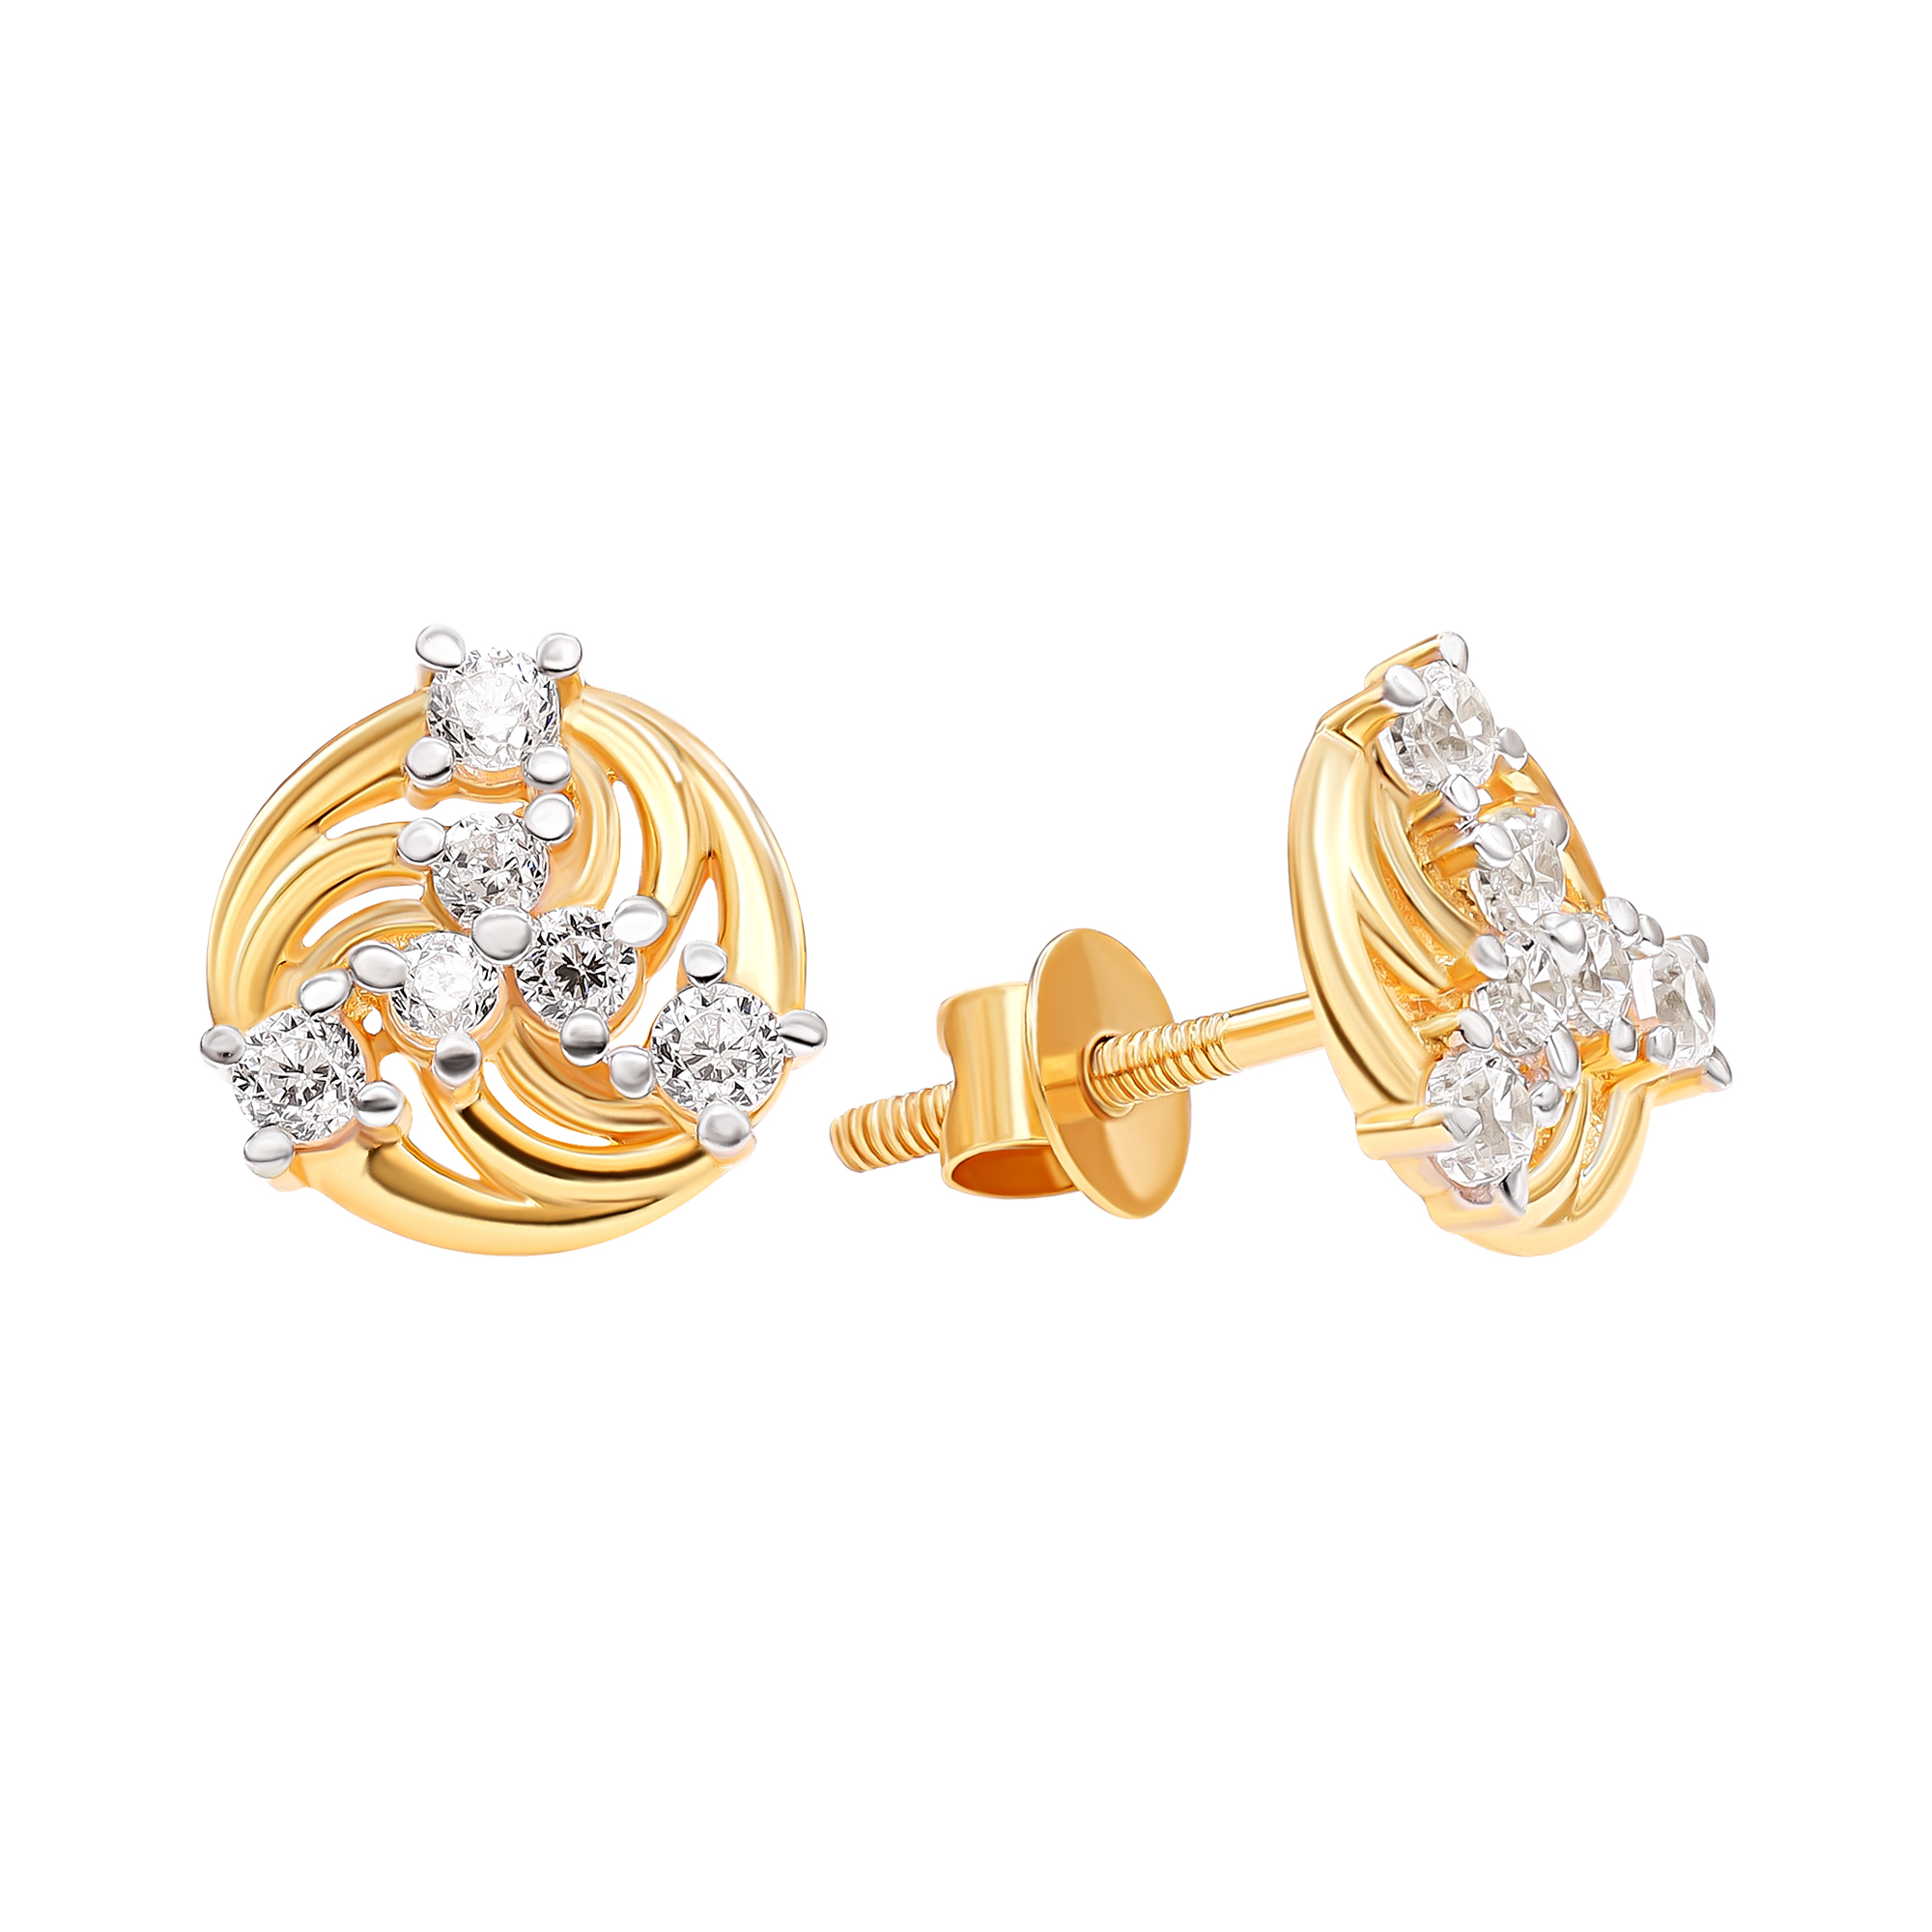 Latest 6 Grams Gold Earrings || Light Weight Gold Earrings Designs - YouTube